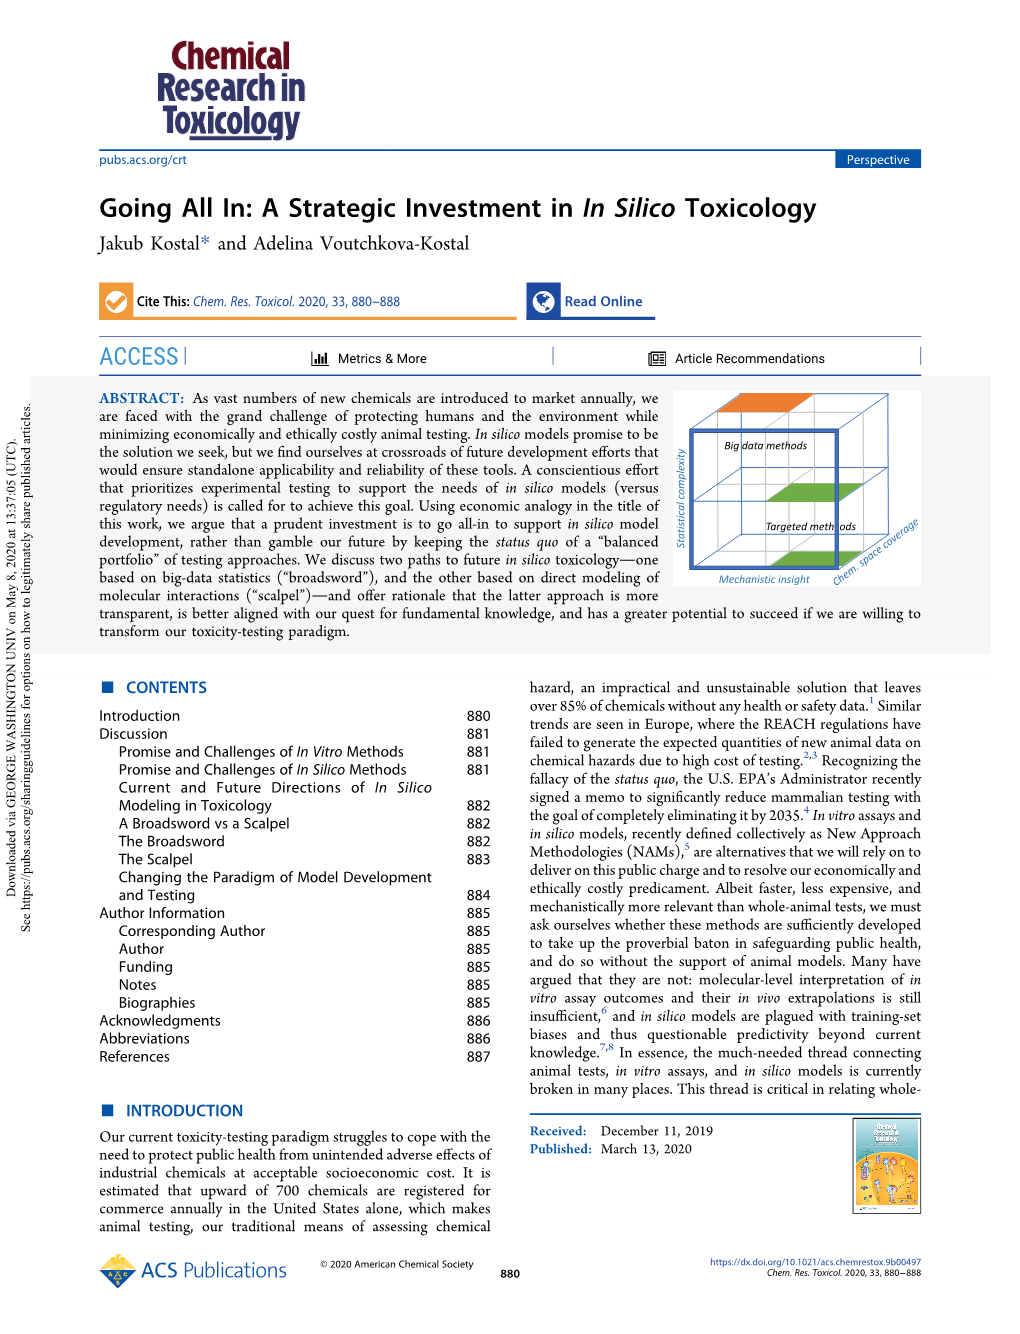 A Strategic Investment in in Silico Toxicology Jakub Kostal* and Adelina Voutchkova-Kostal